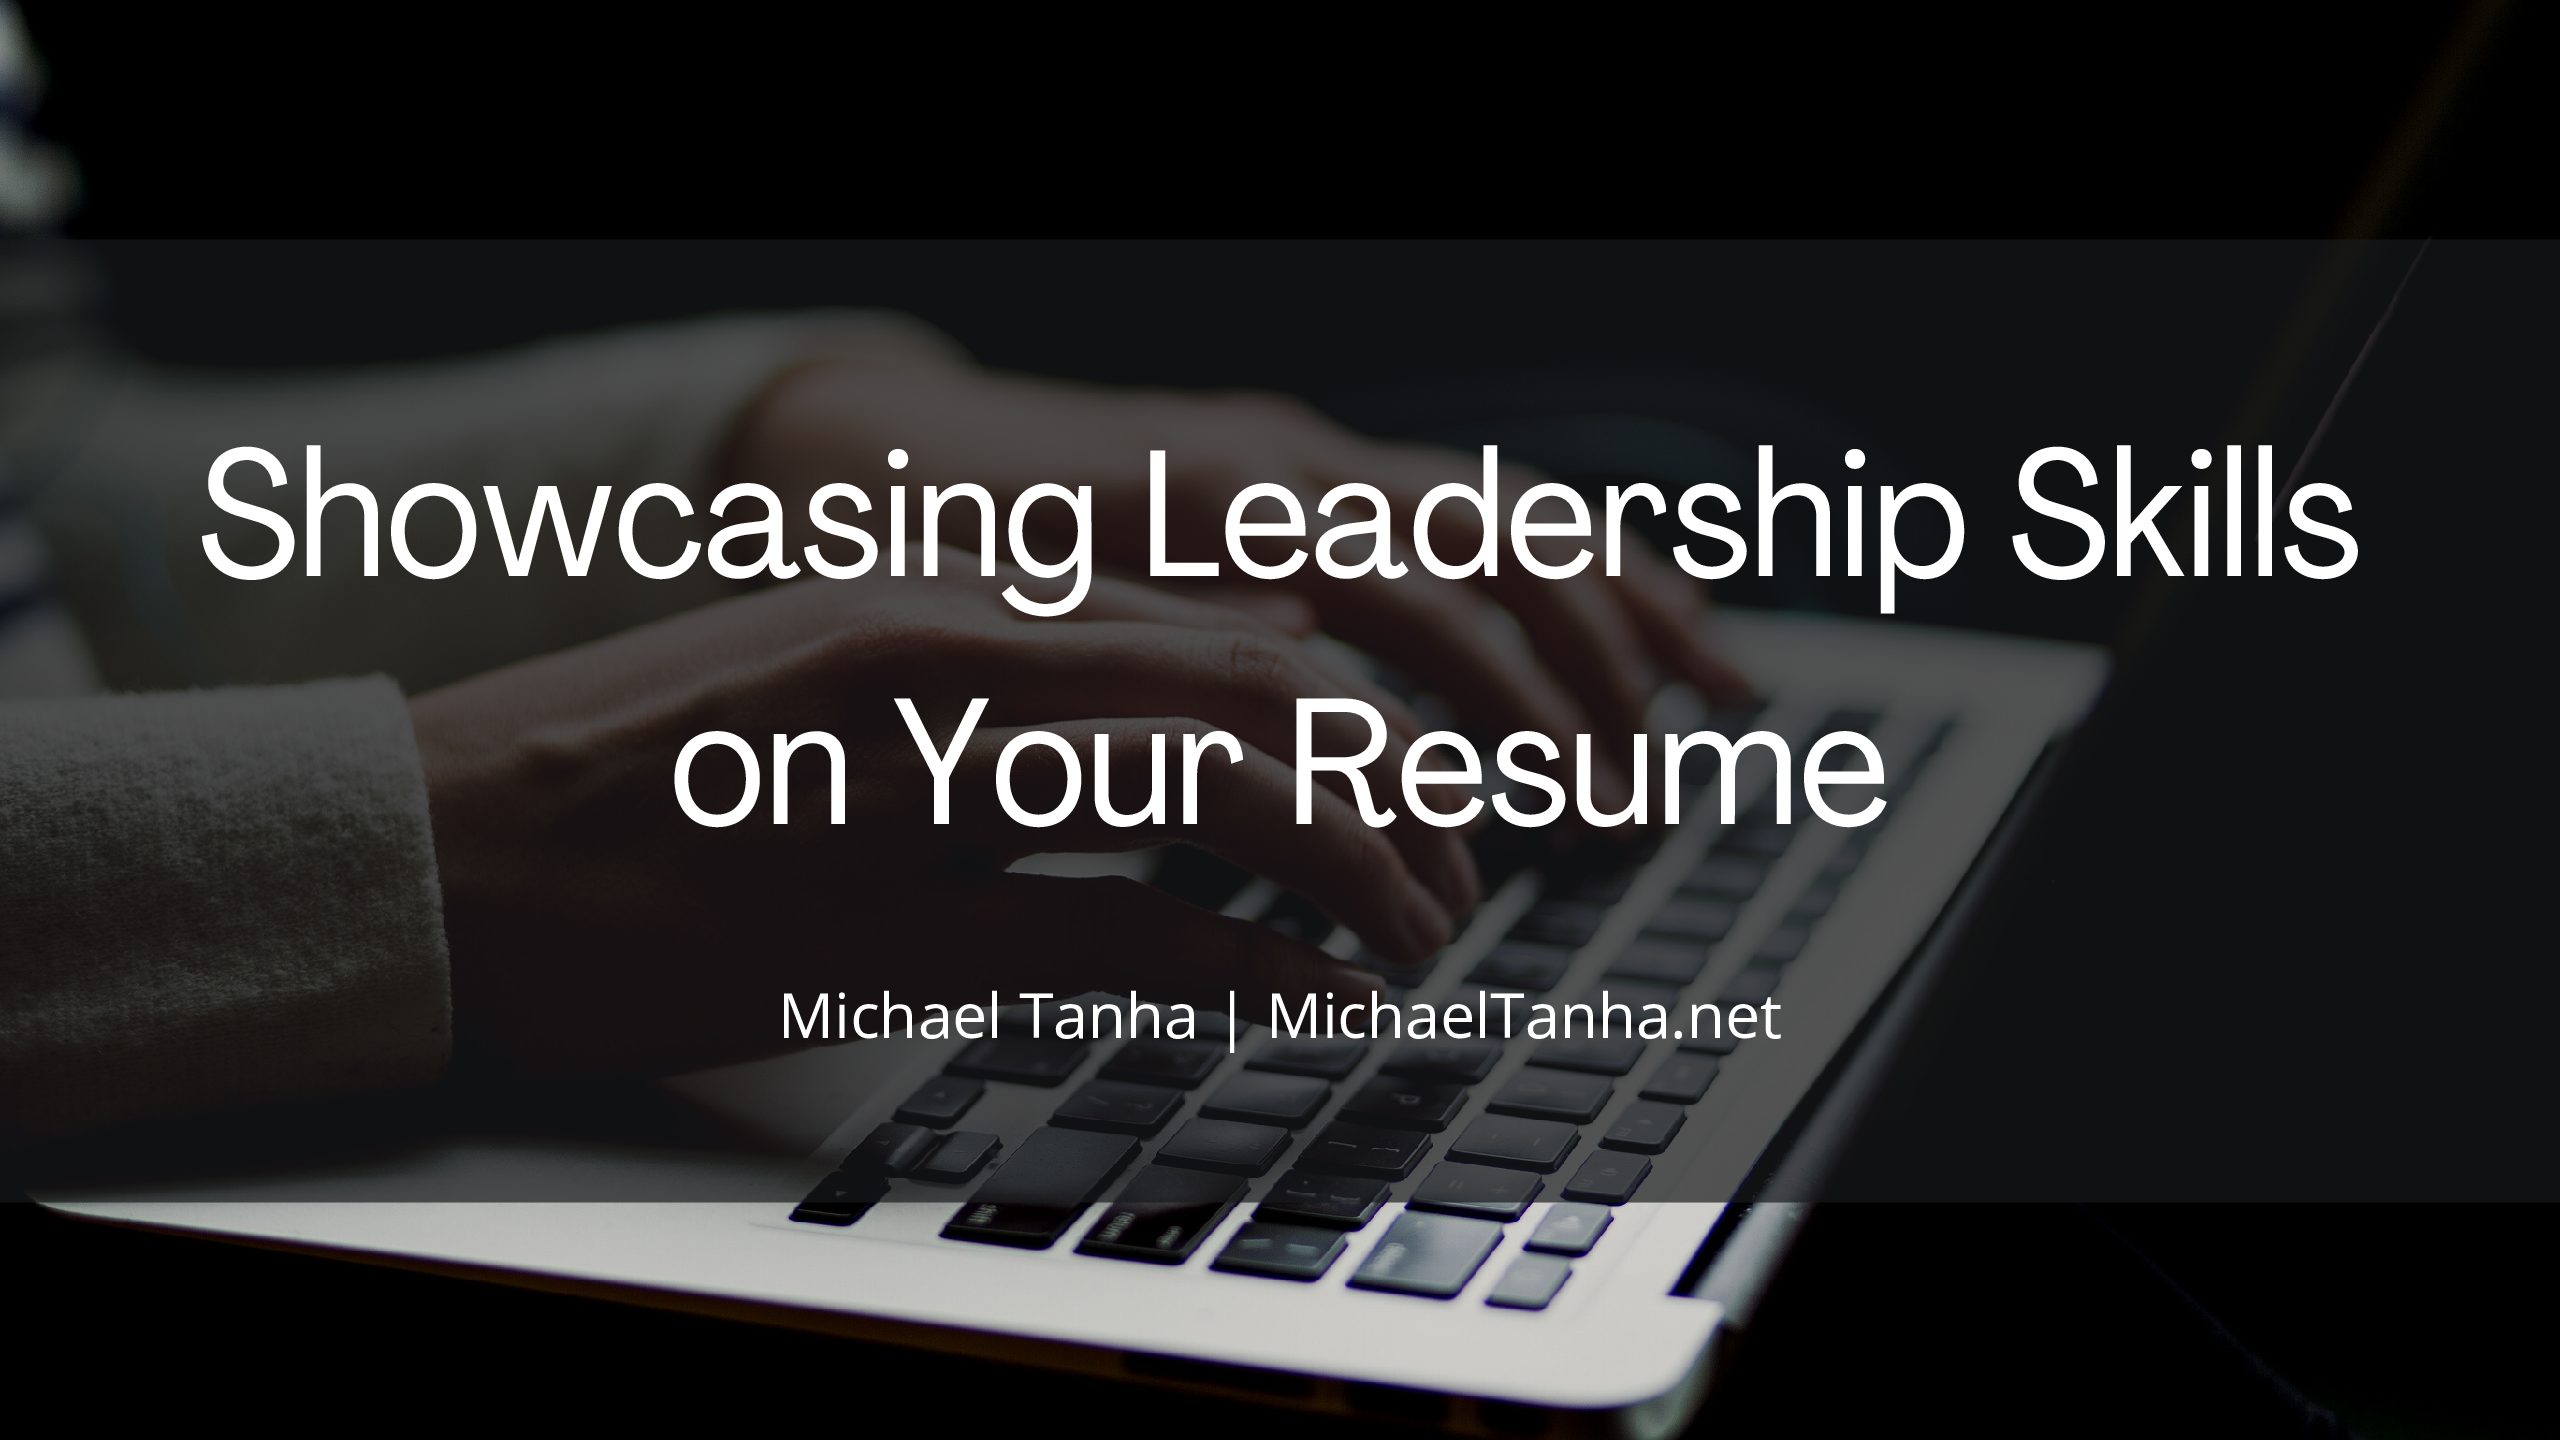 Showcasing Leadership Skills on Your Resume